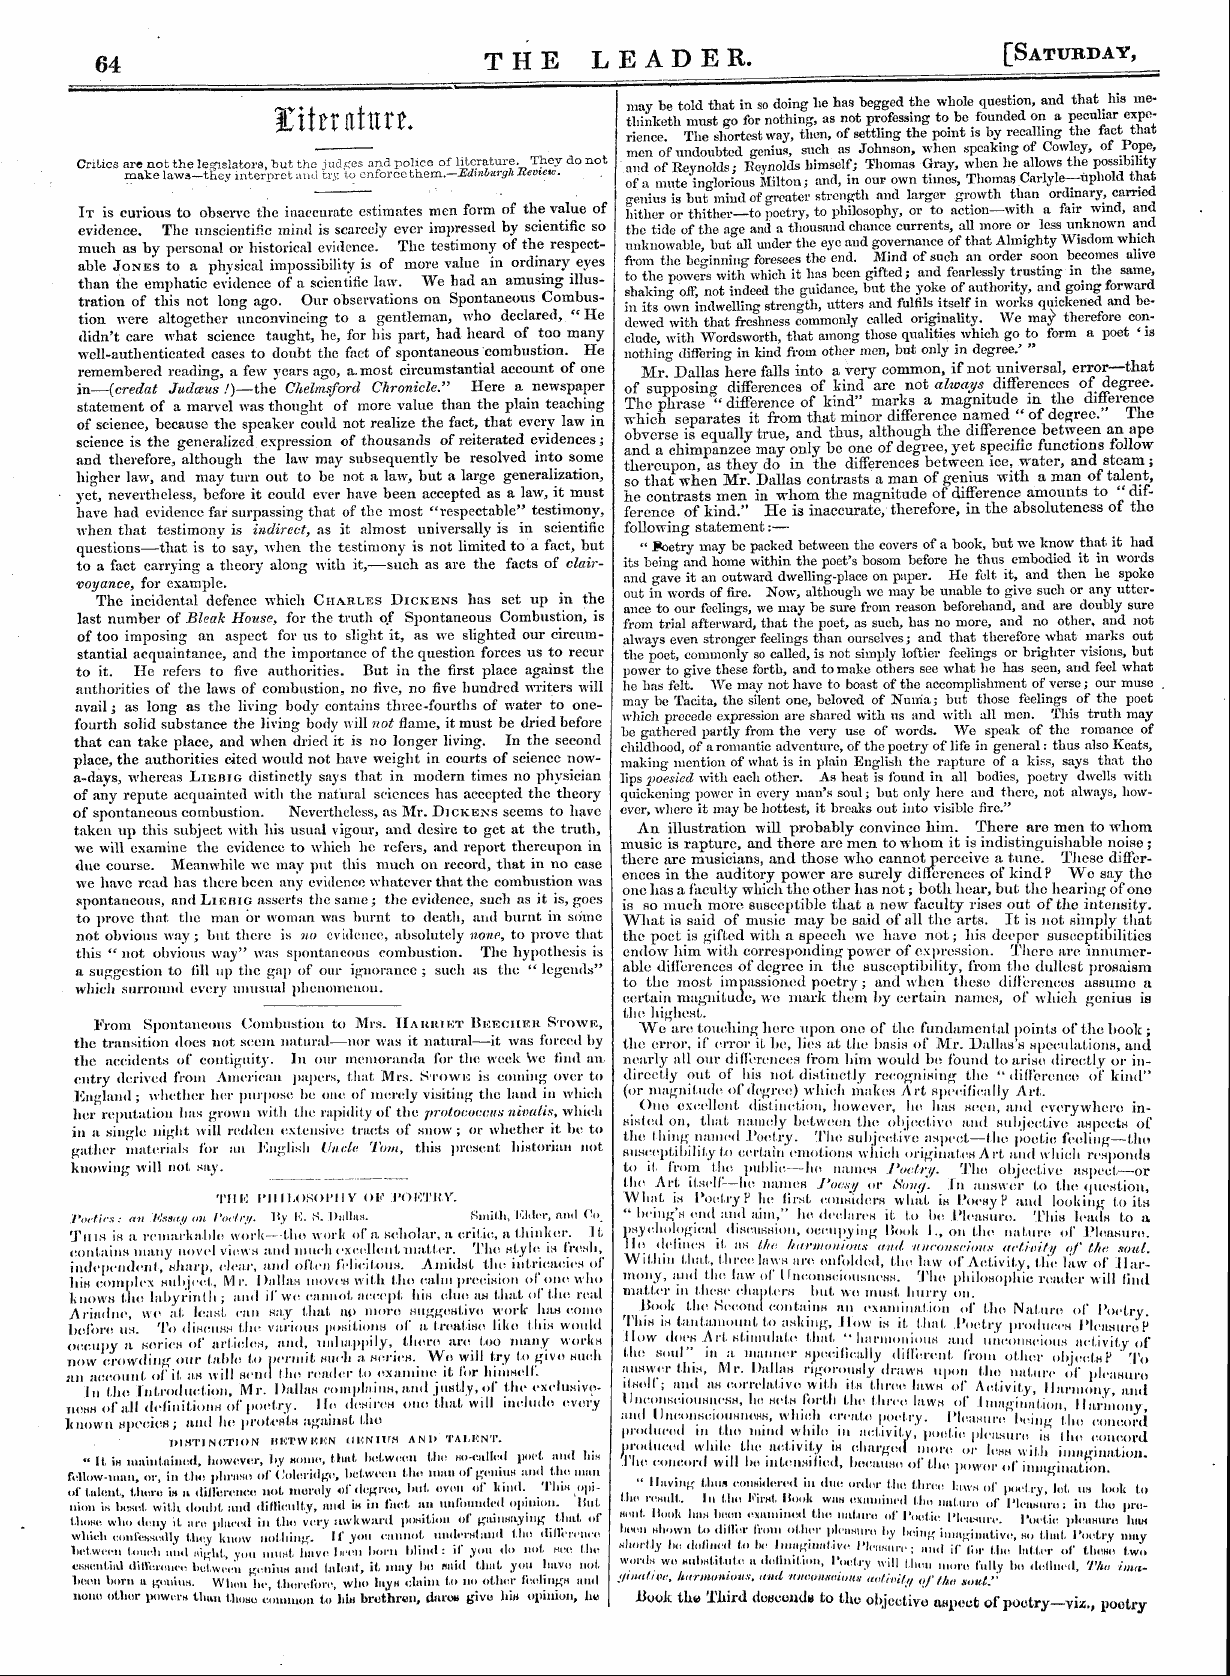 Leader (1850-1860): jS F Y, Town edition - Ciftratttrt.